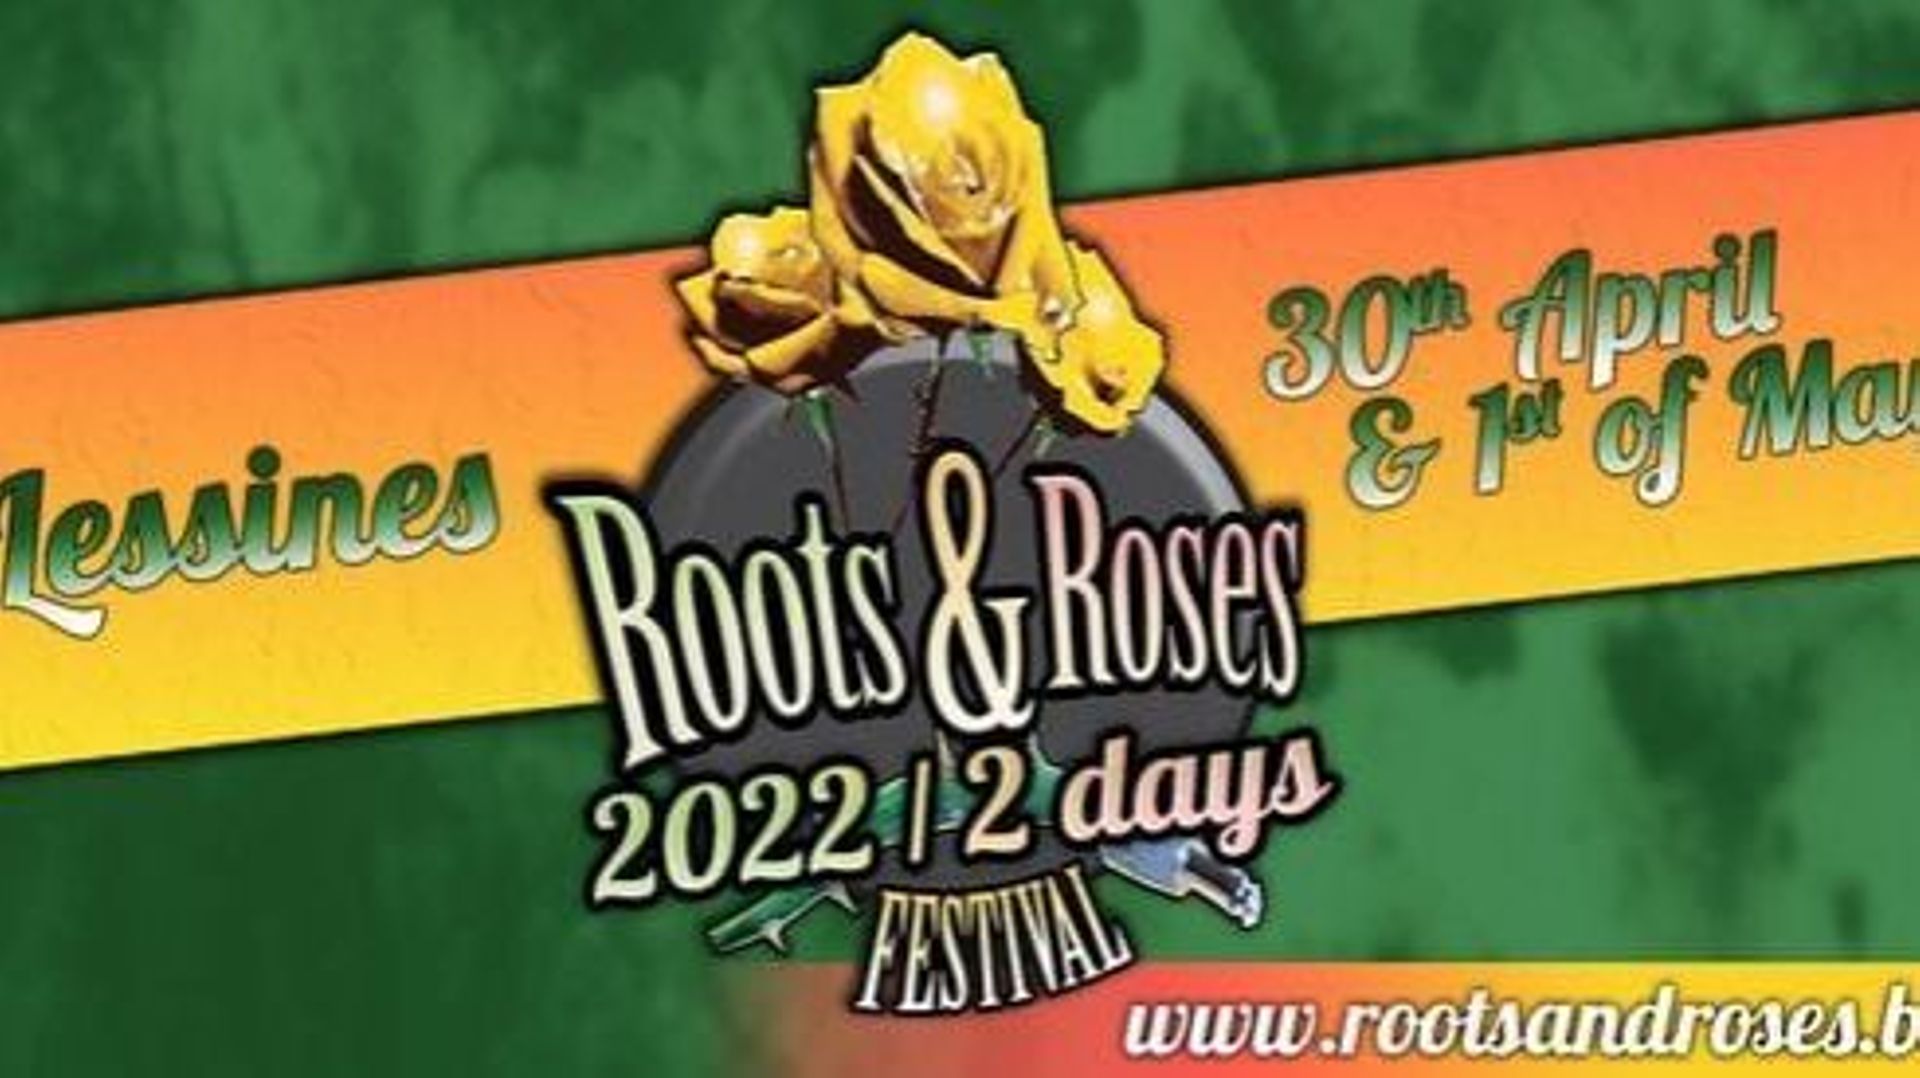 Le Roots & Roses festival dans Classic 21 Underground